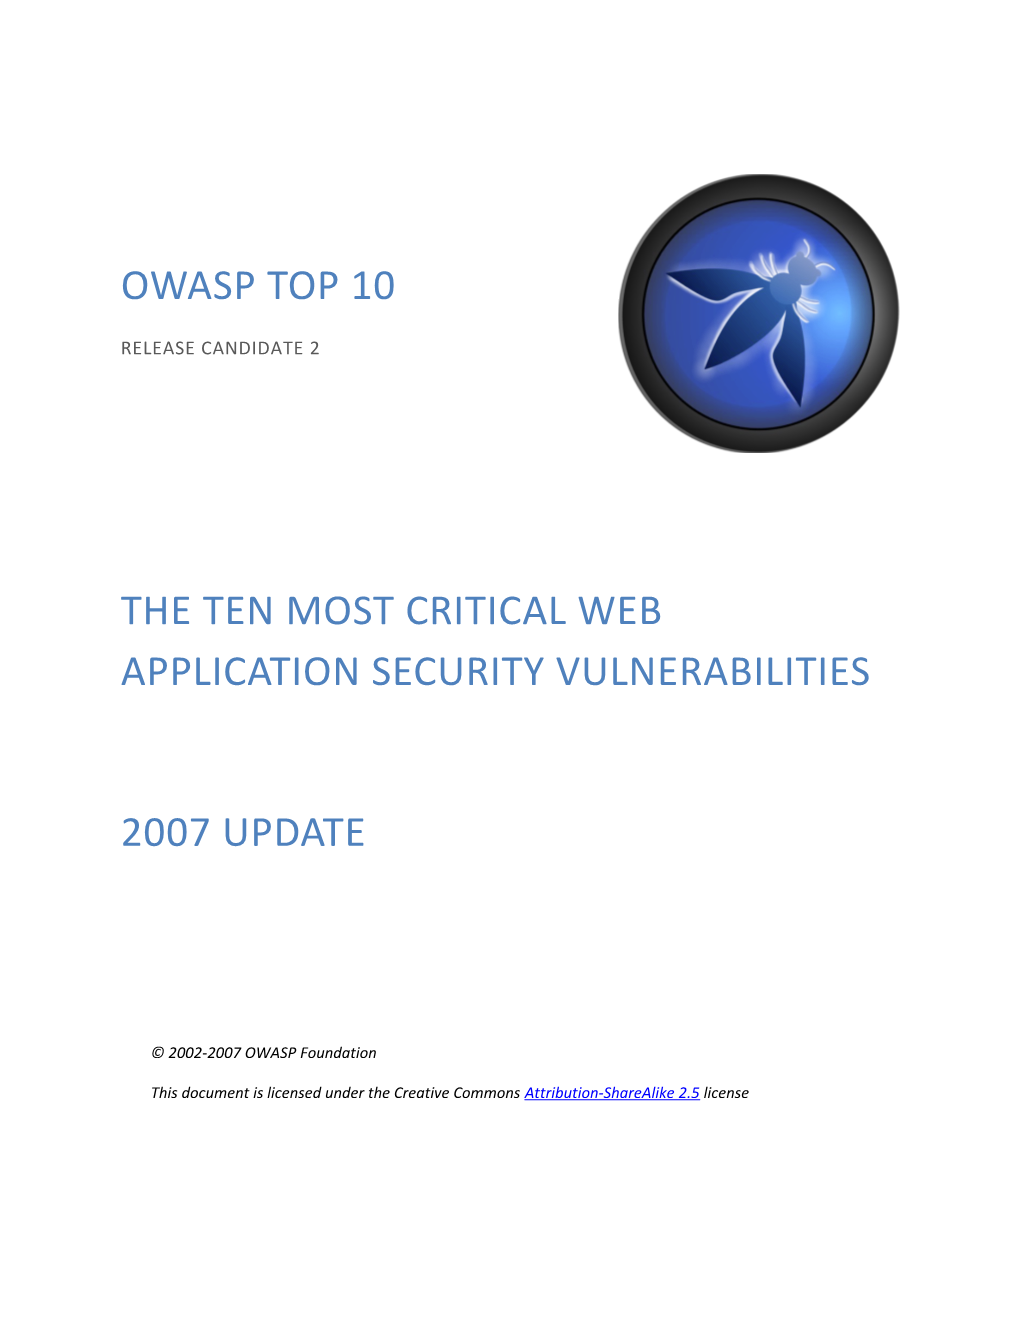 The Ten Most Critical Web Application Security Vulnerabilities